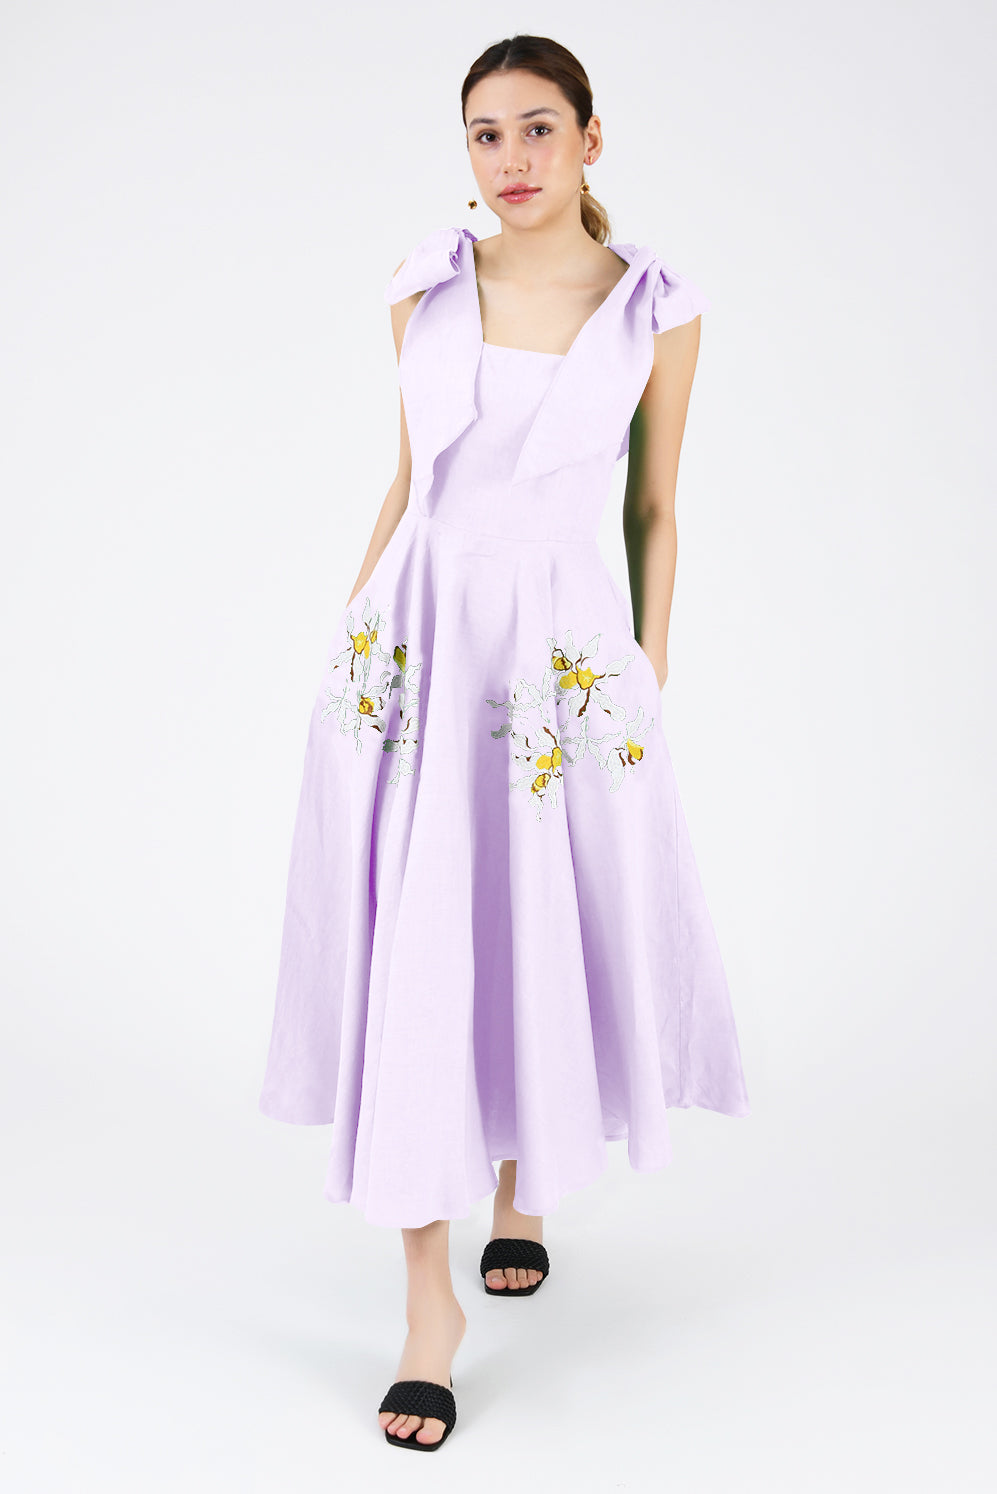 Nilen Dress (Wanga Collection) in Lilac